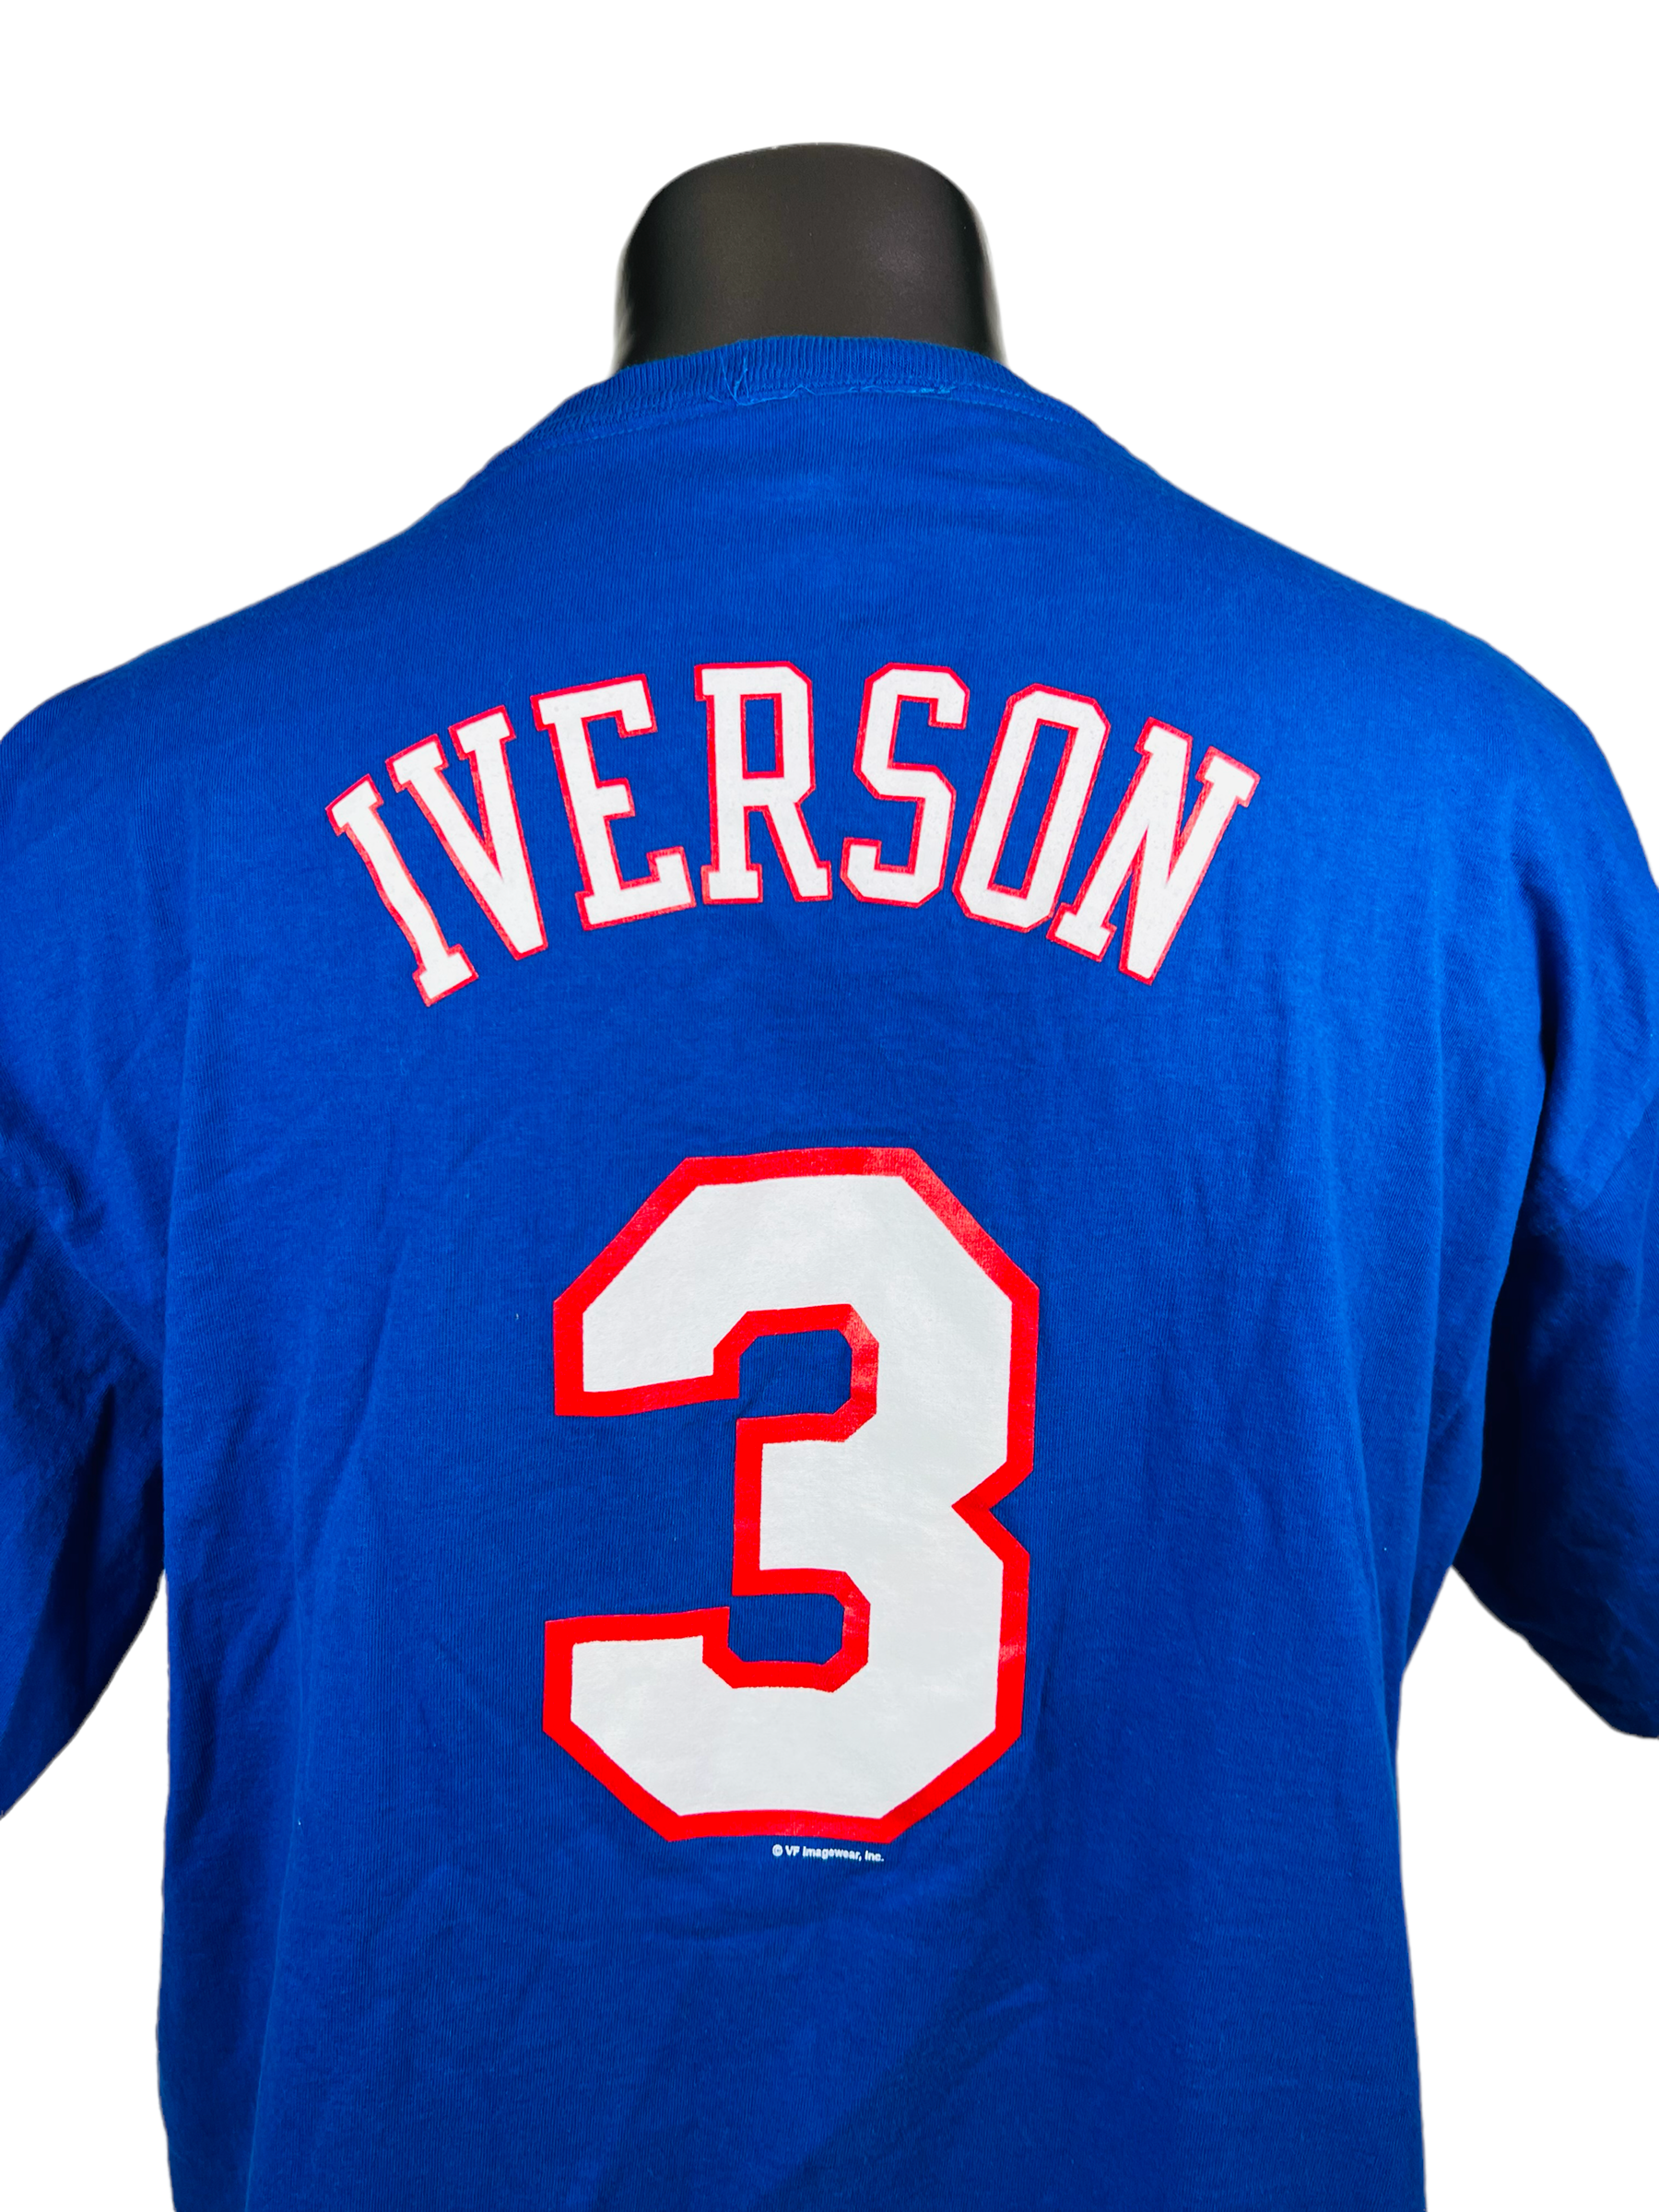 Philadelphia Sixers *Iverson* NBA Champion Shirt S